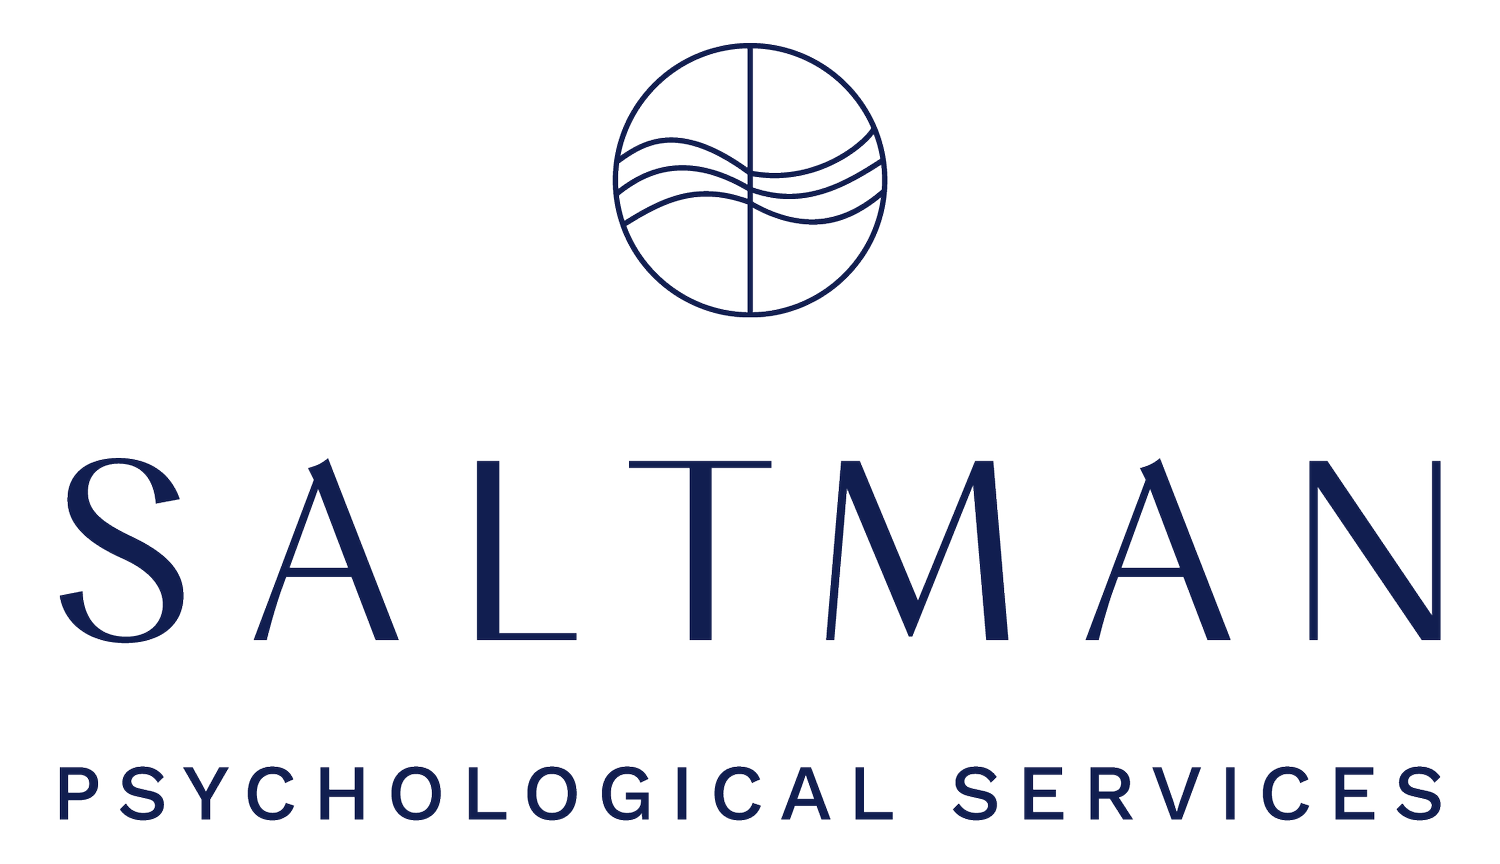 Saltman Psychological Services